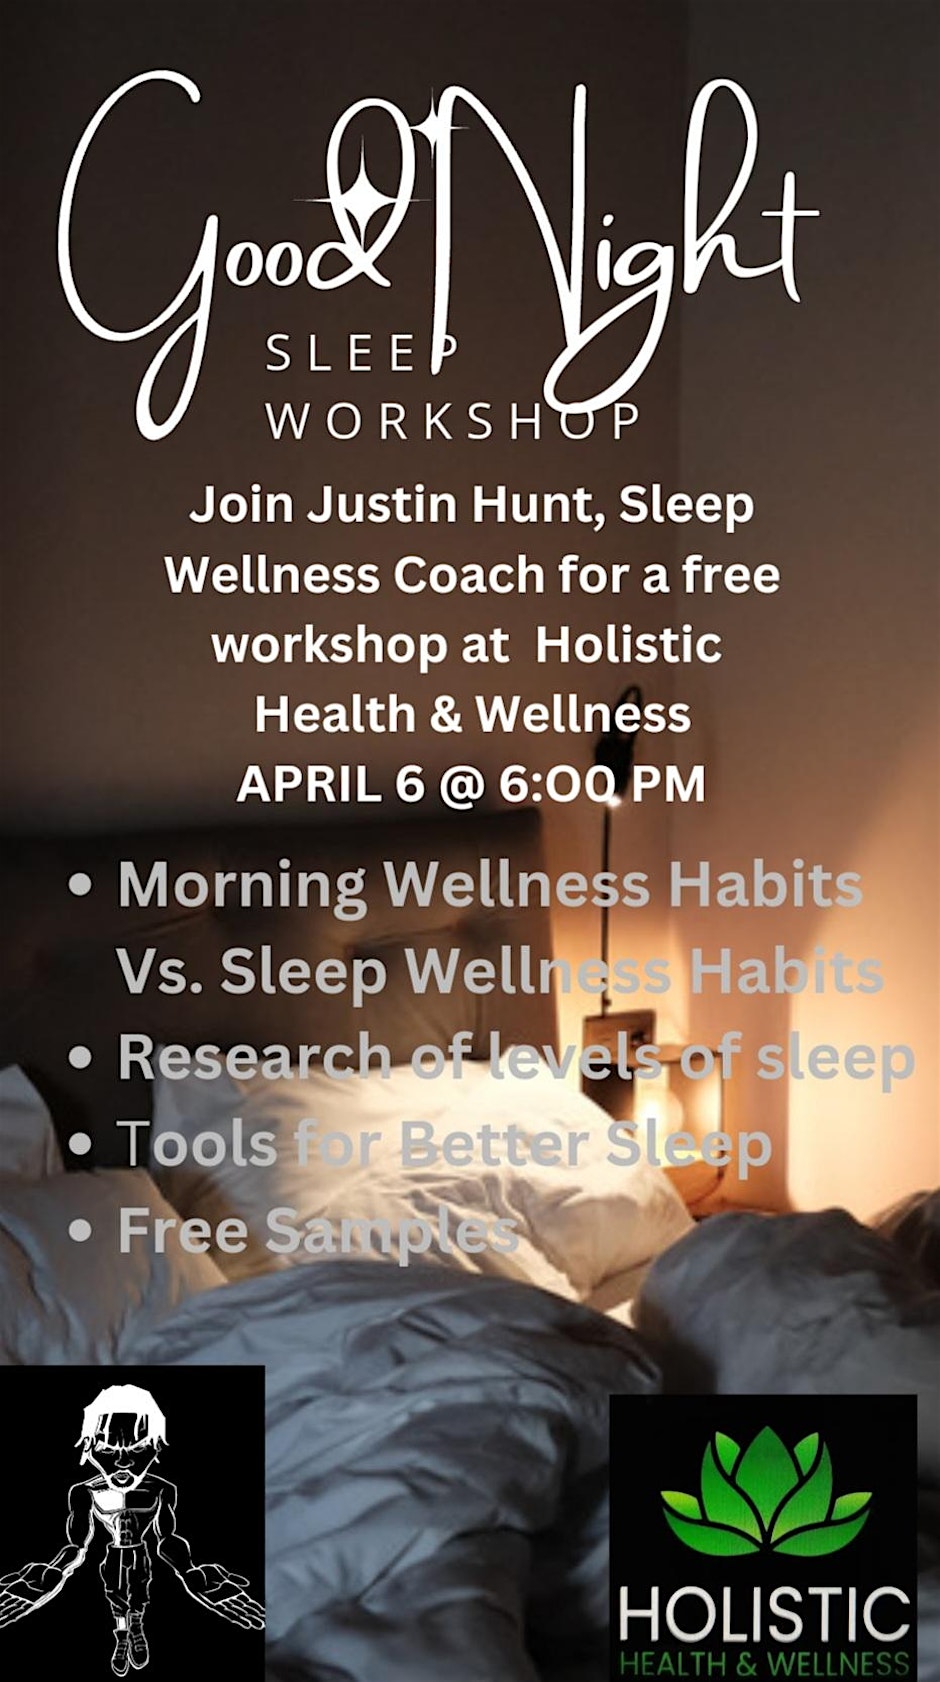 Good Night: Sleep Wellness Workshop